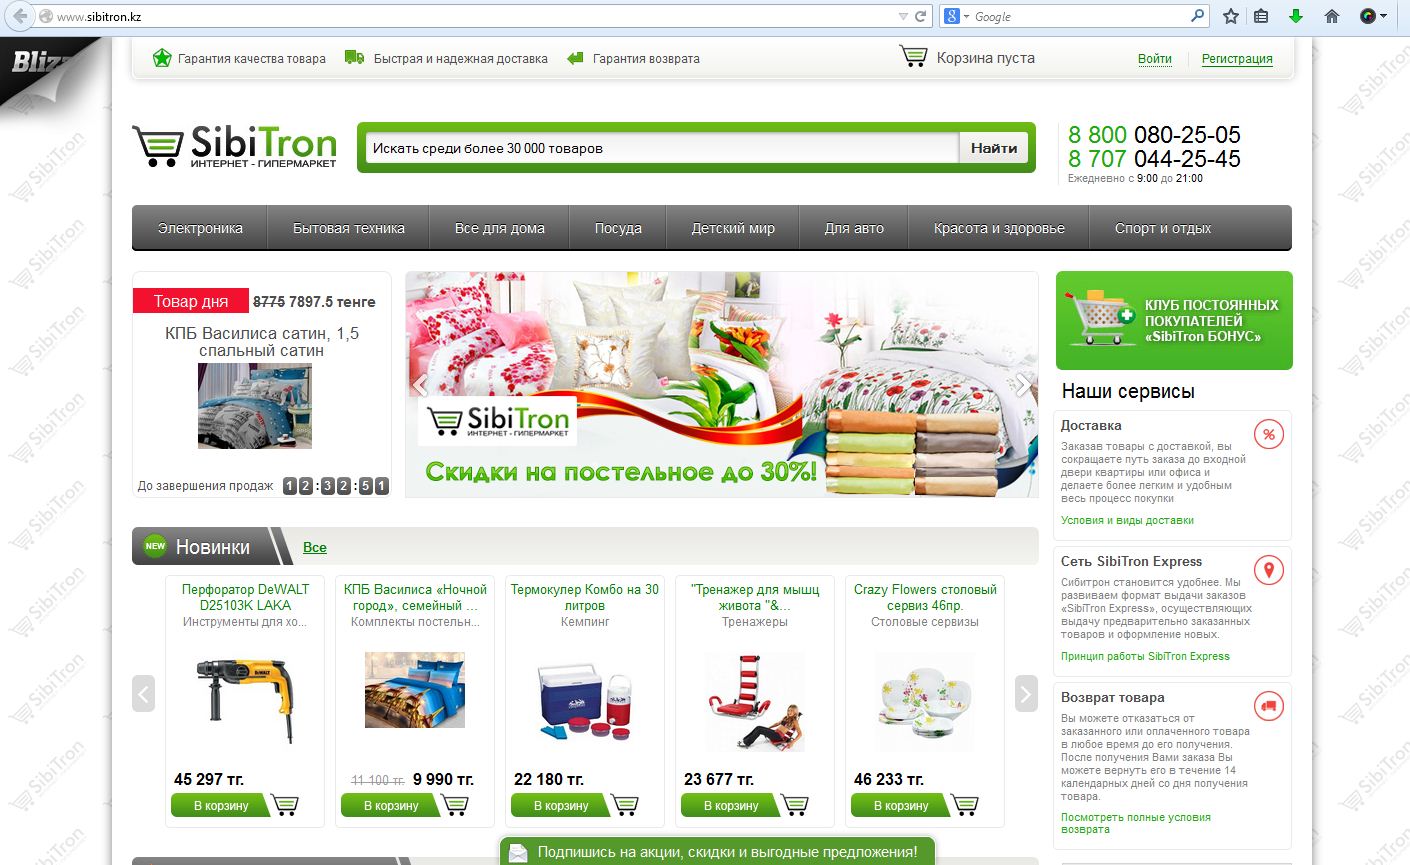 Сайт интернет-гипермаркета SibiTron